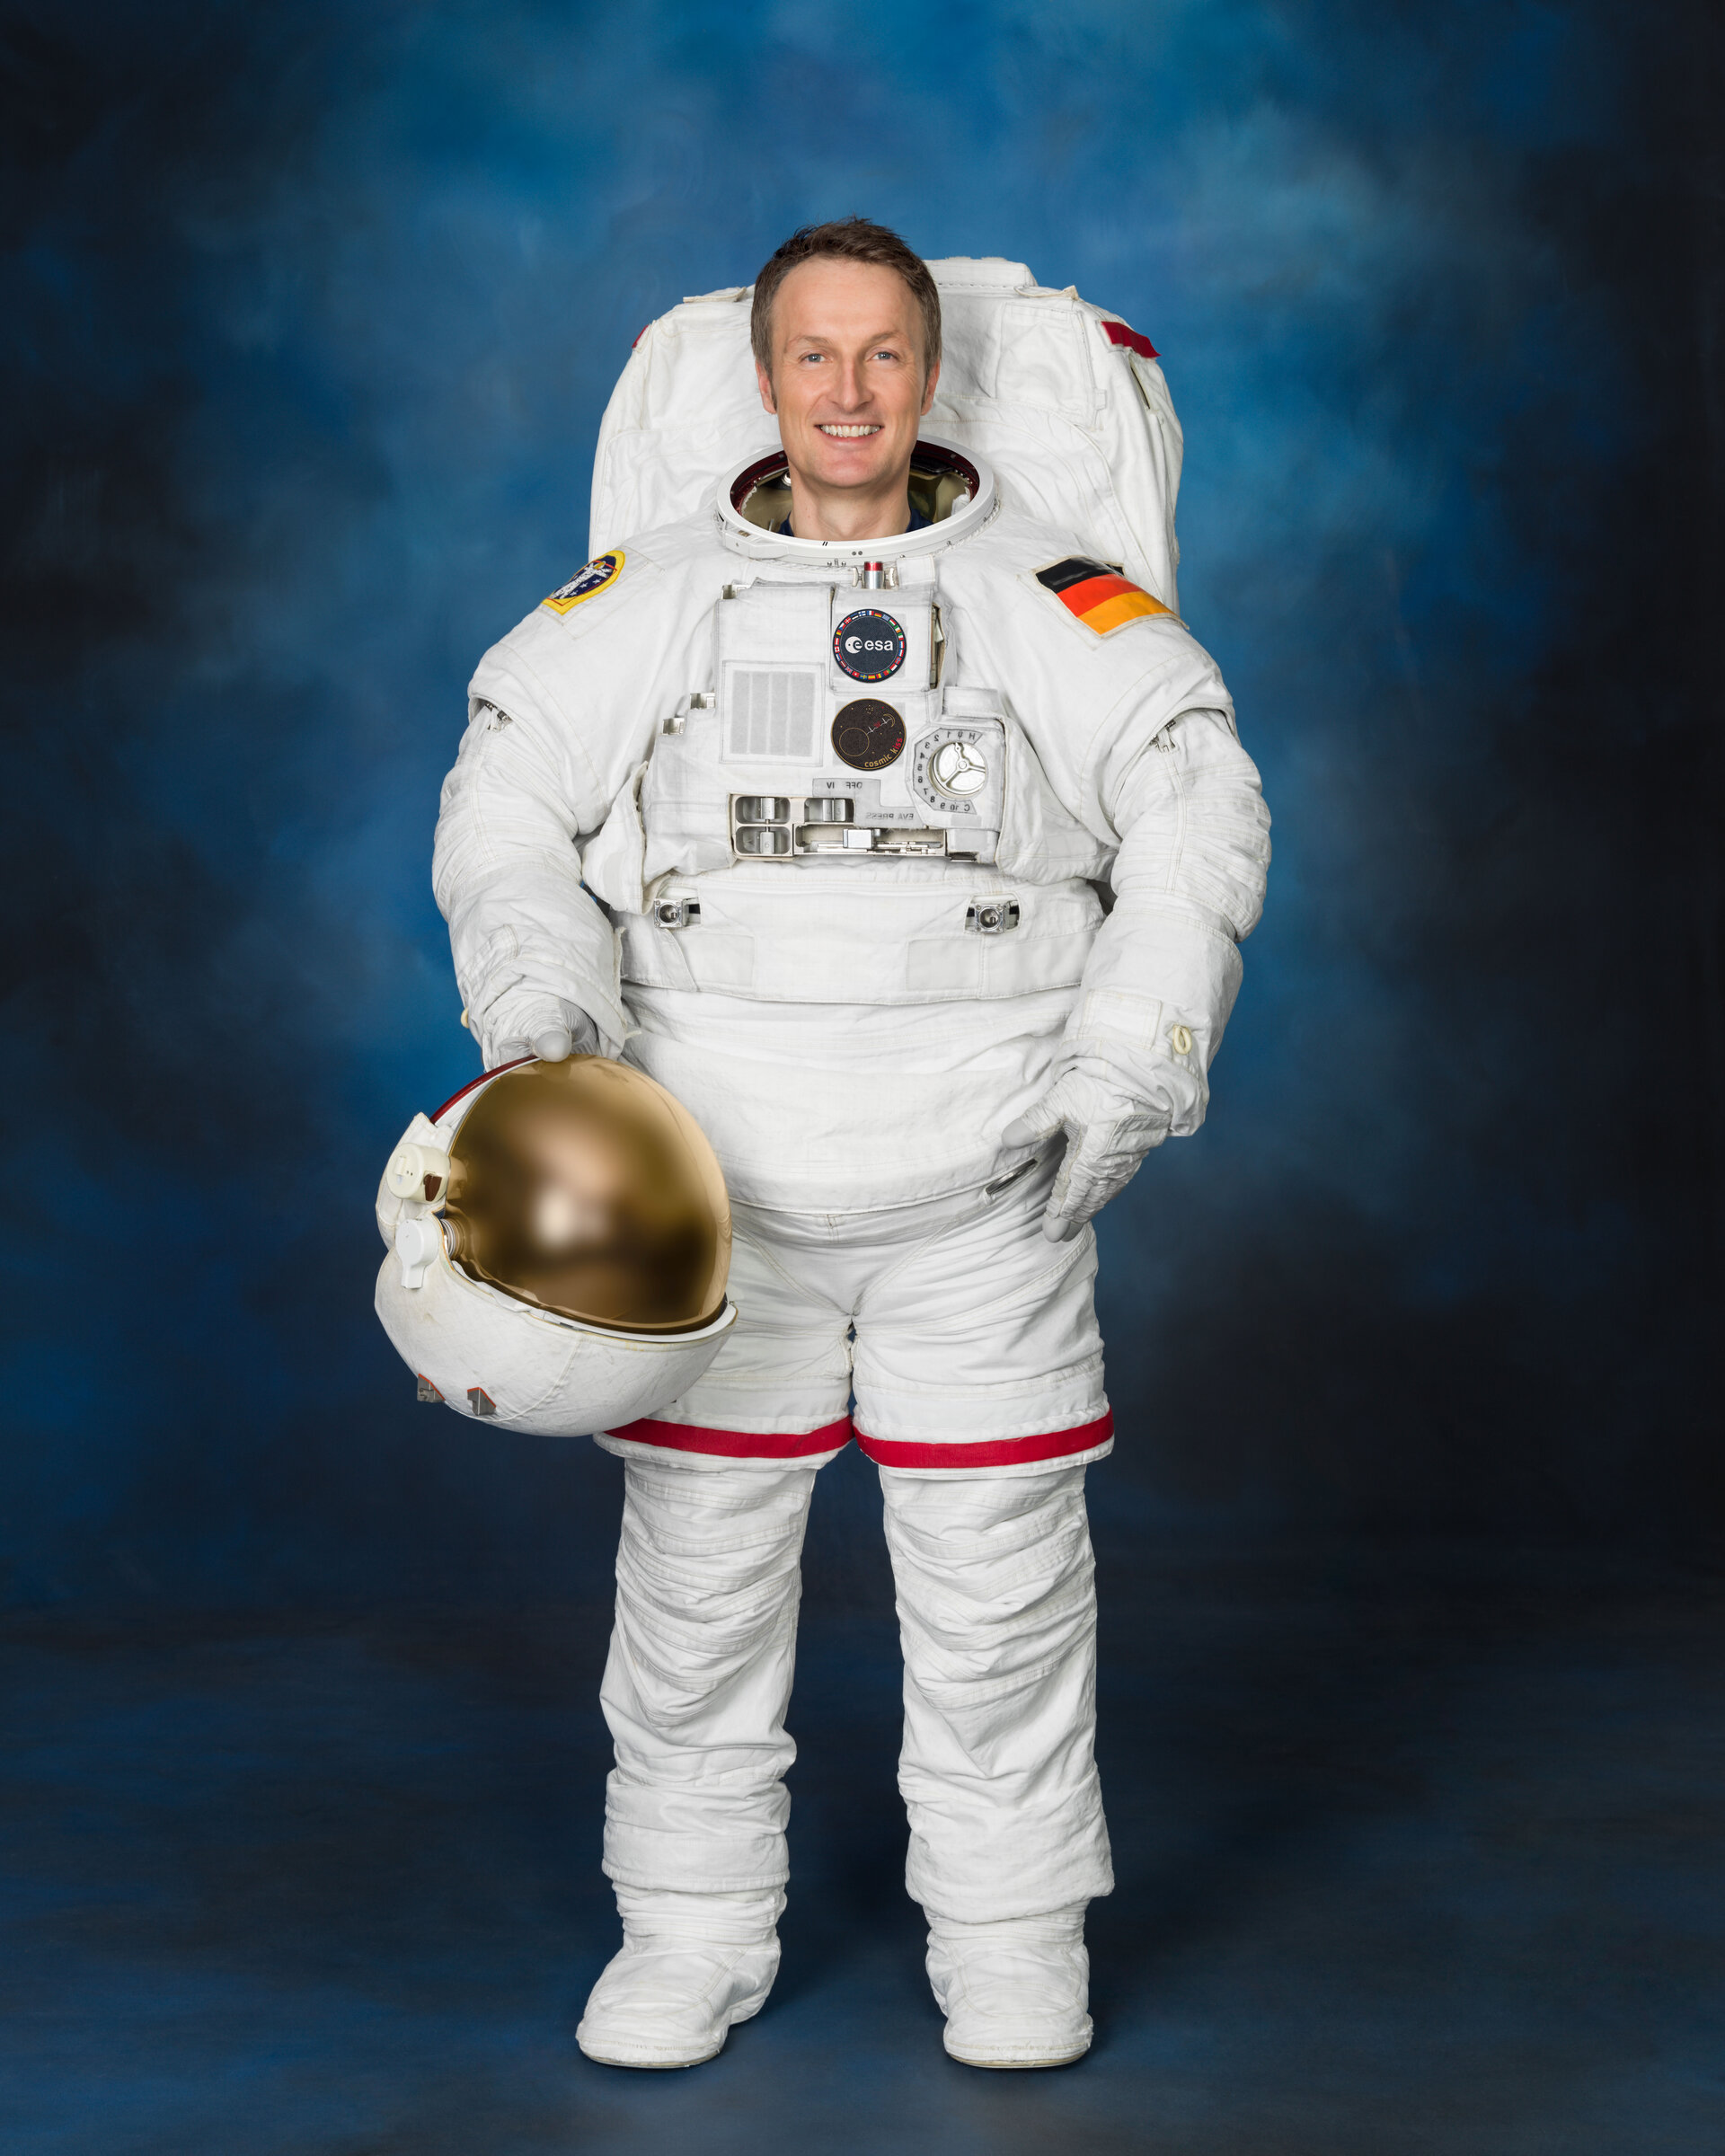 Official photo of Matthias Maurer wearing the NASA EMU spacesuit